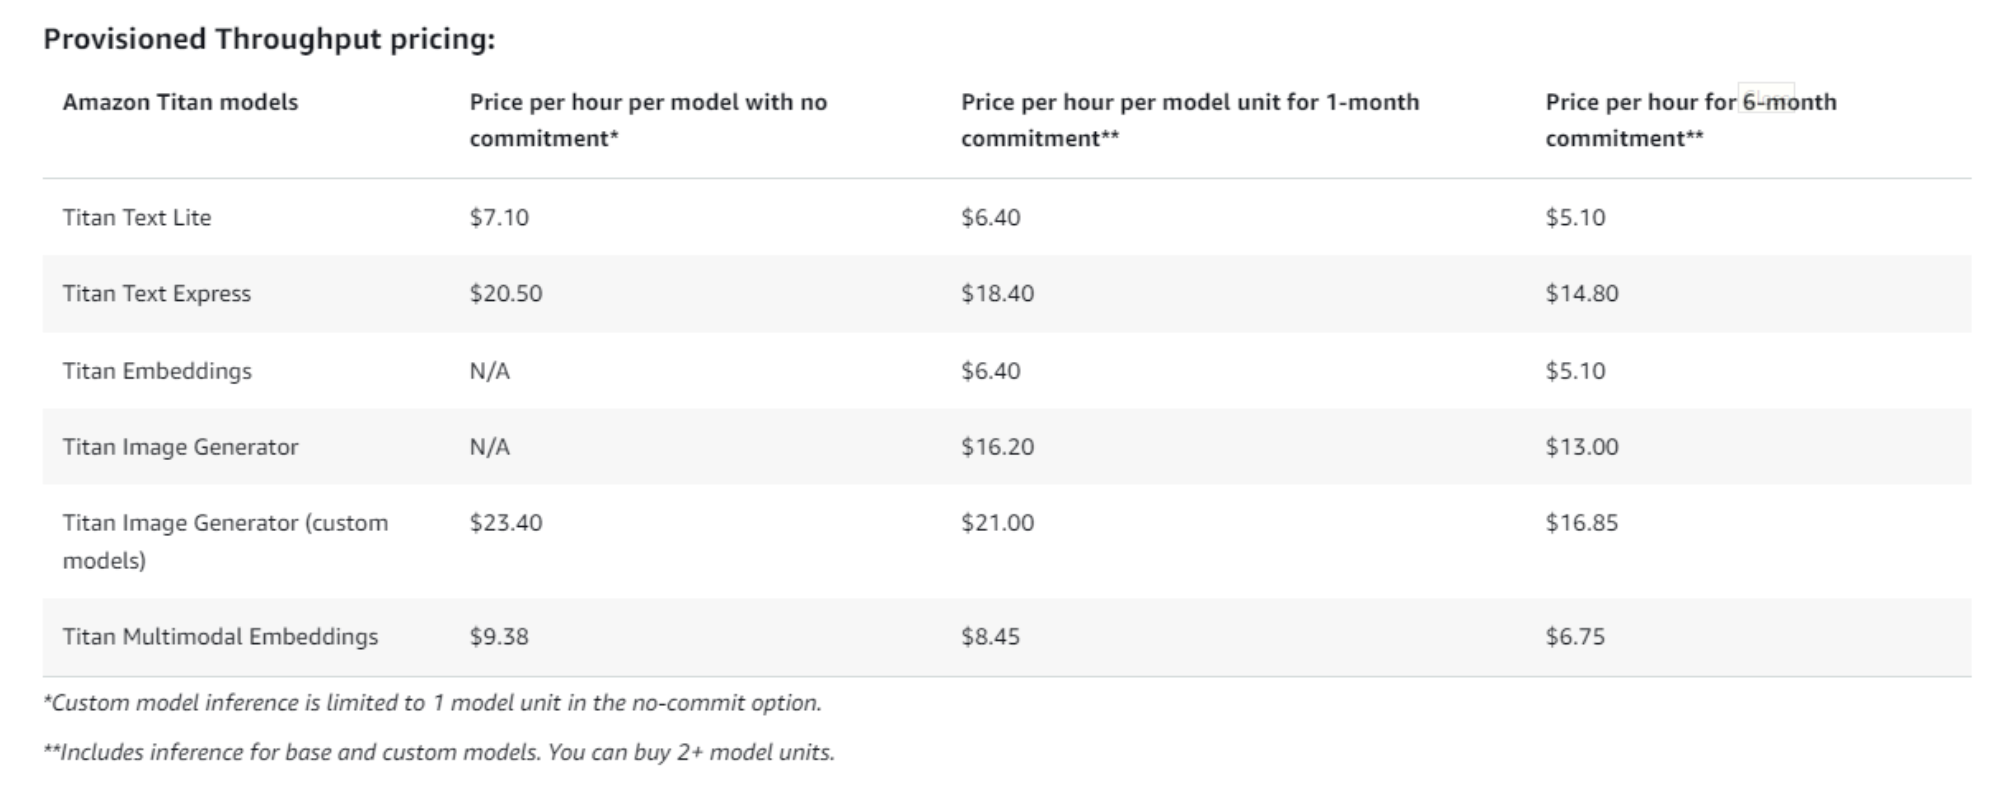 Provisioned Throughput prices for the Amazon Titan model